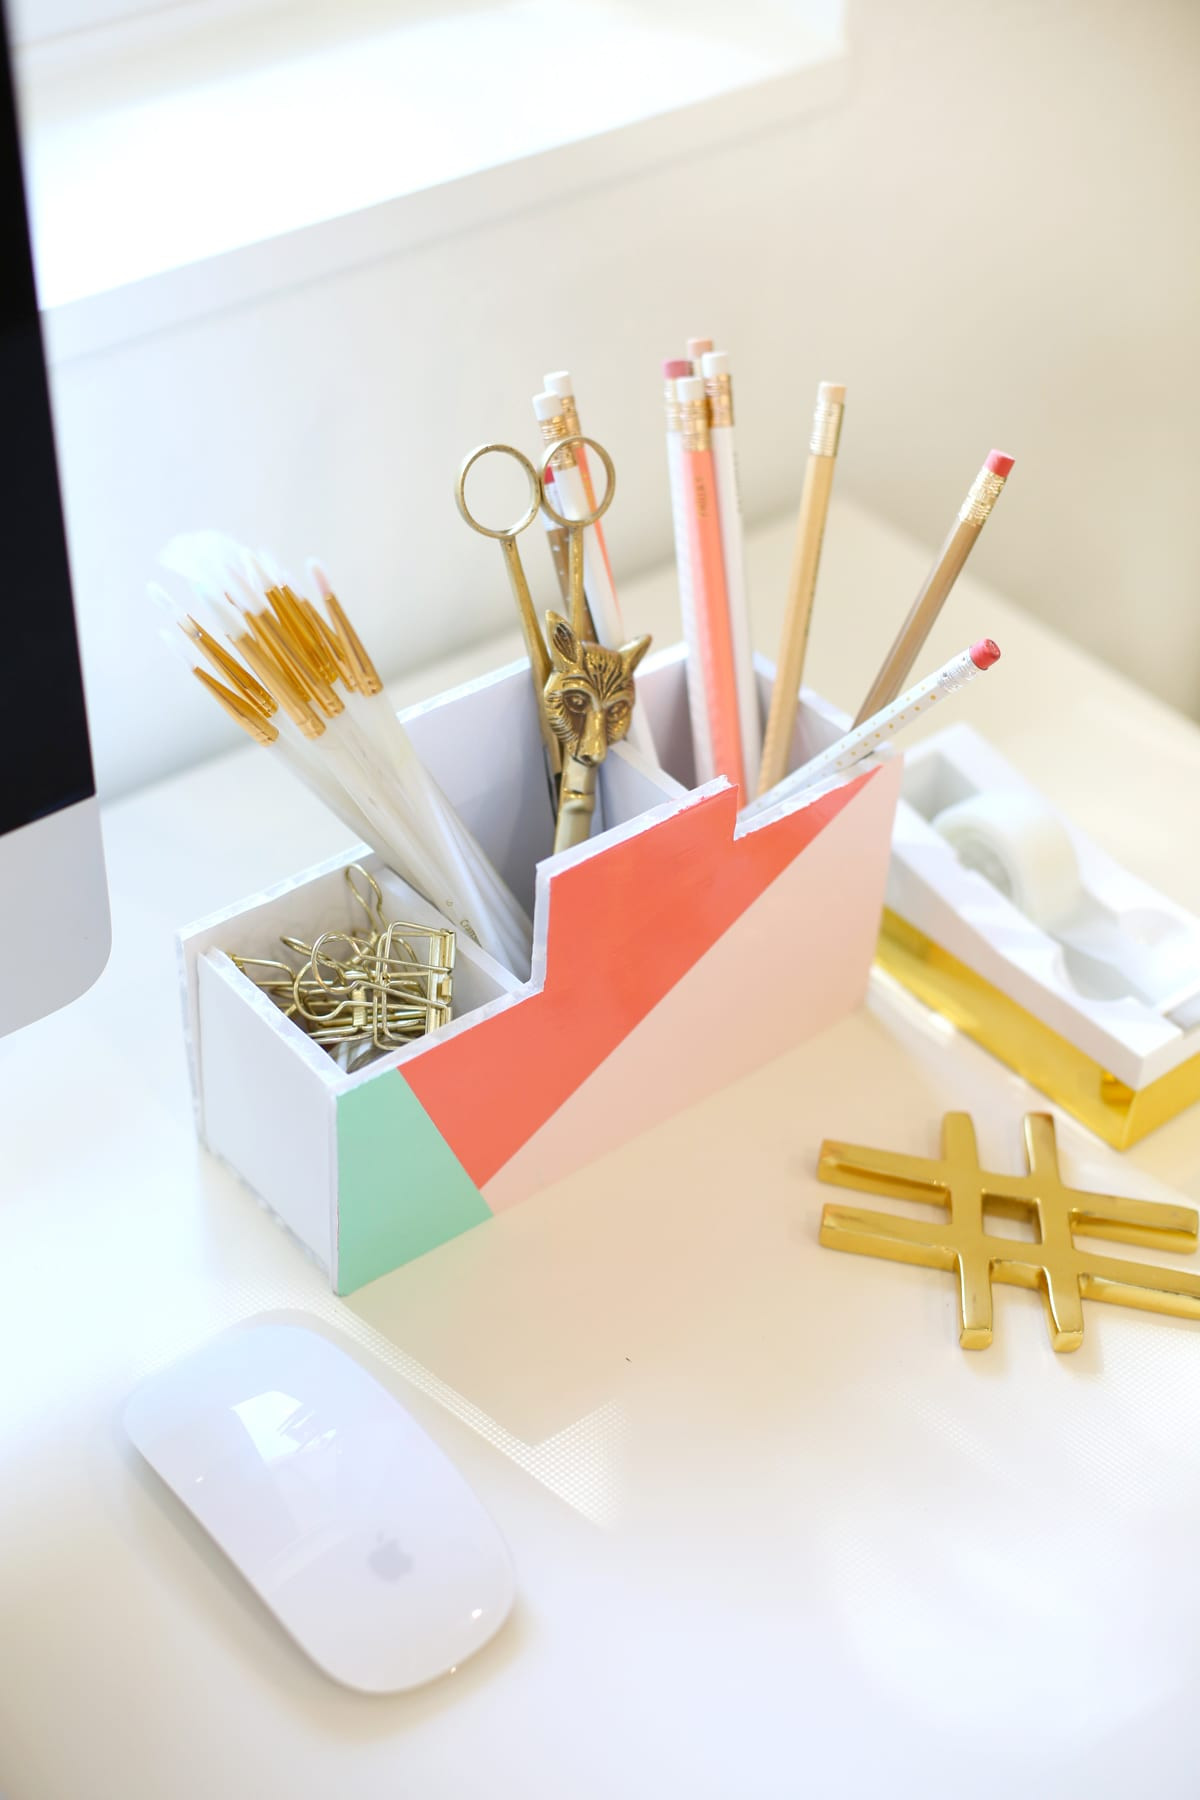 Best ideas about DIY Desk Organizer
. Save or Pin DIY Back to School Desk Organizer Now.